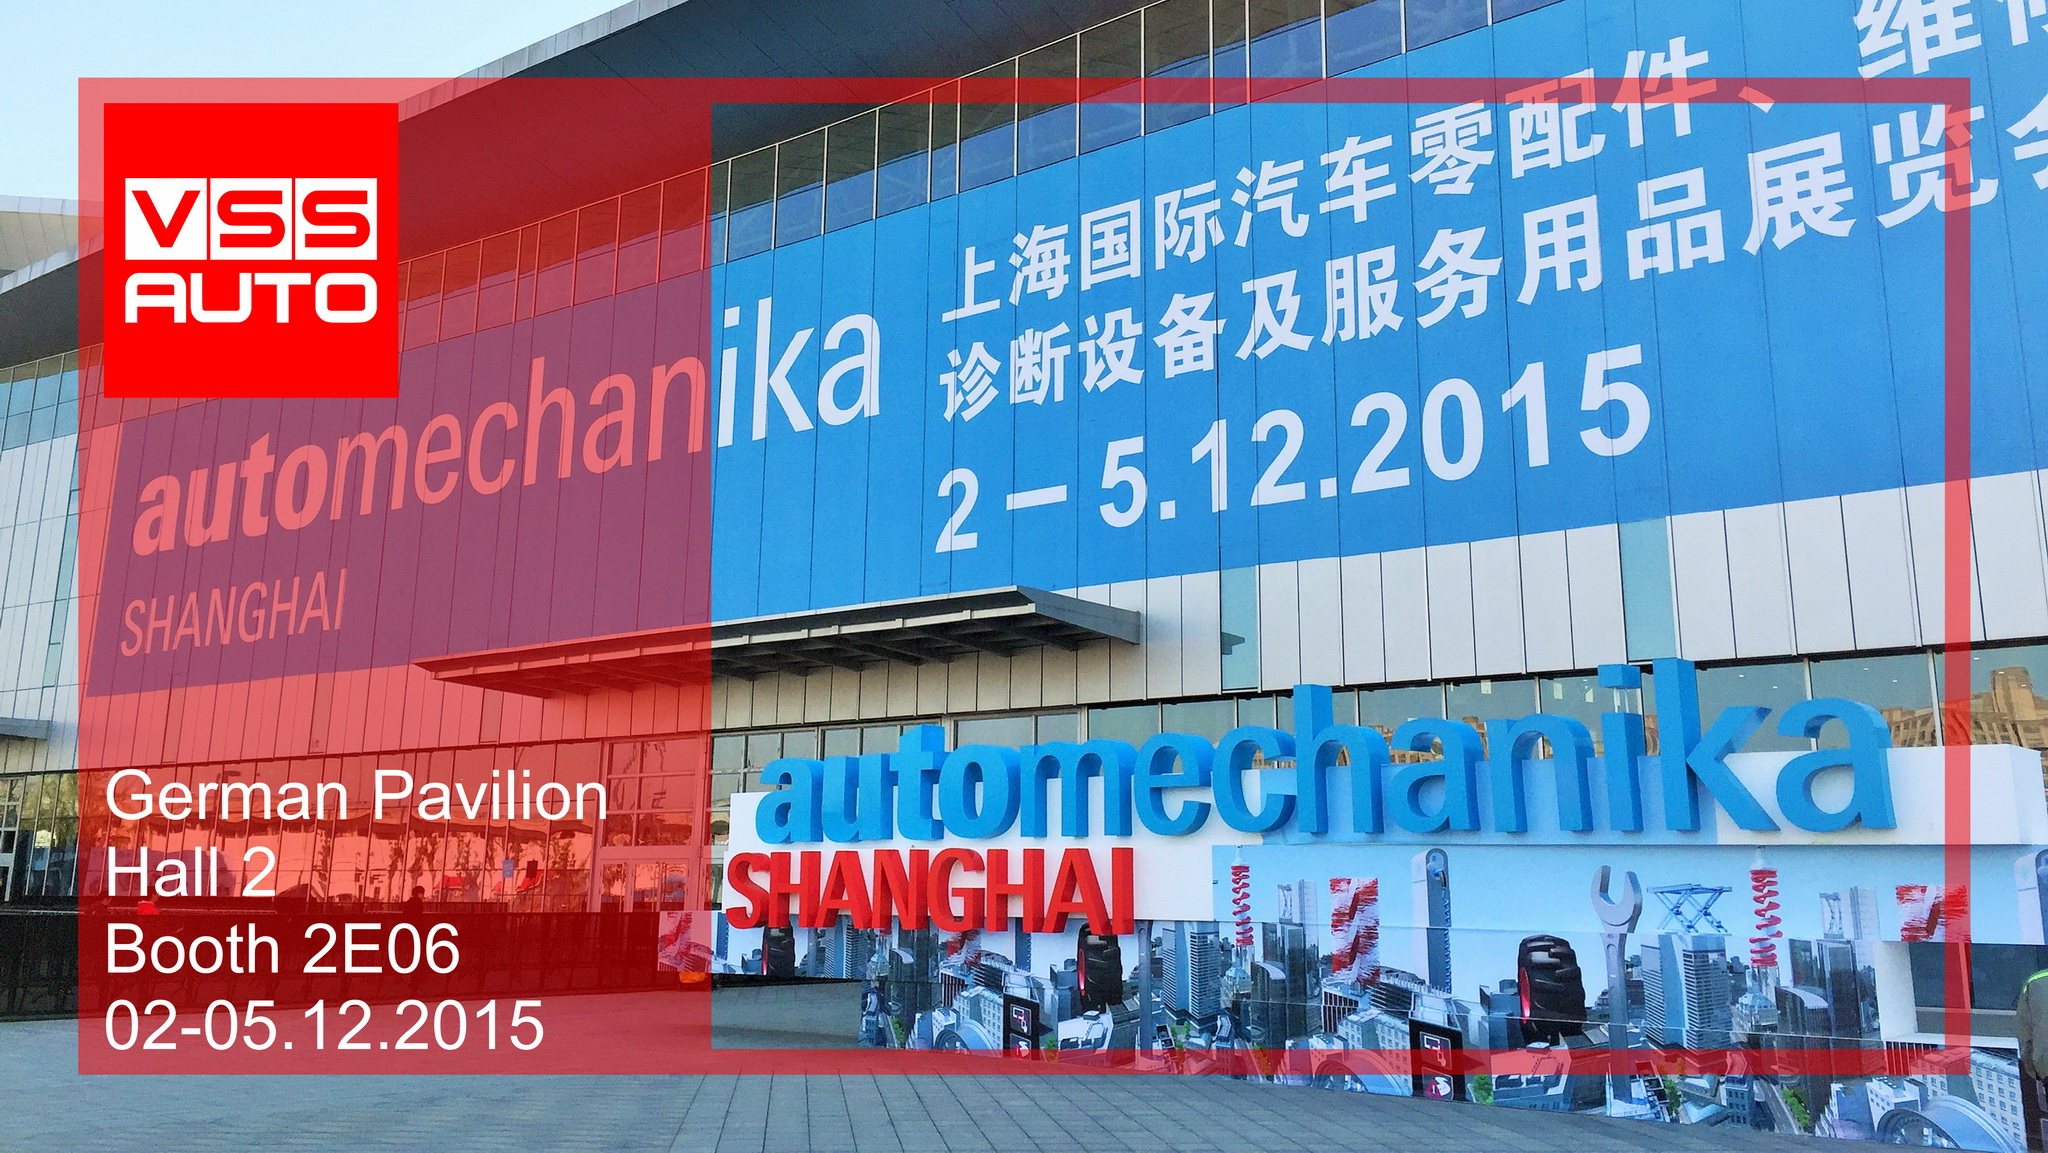 VSS AUTO debut at Automechanika Shanghai 2015